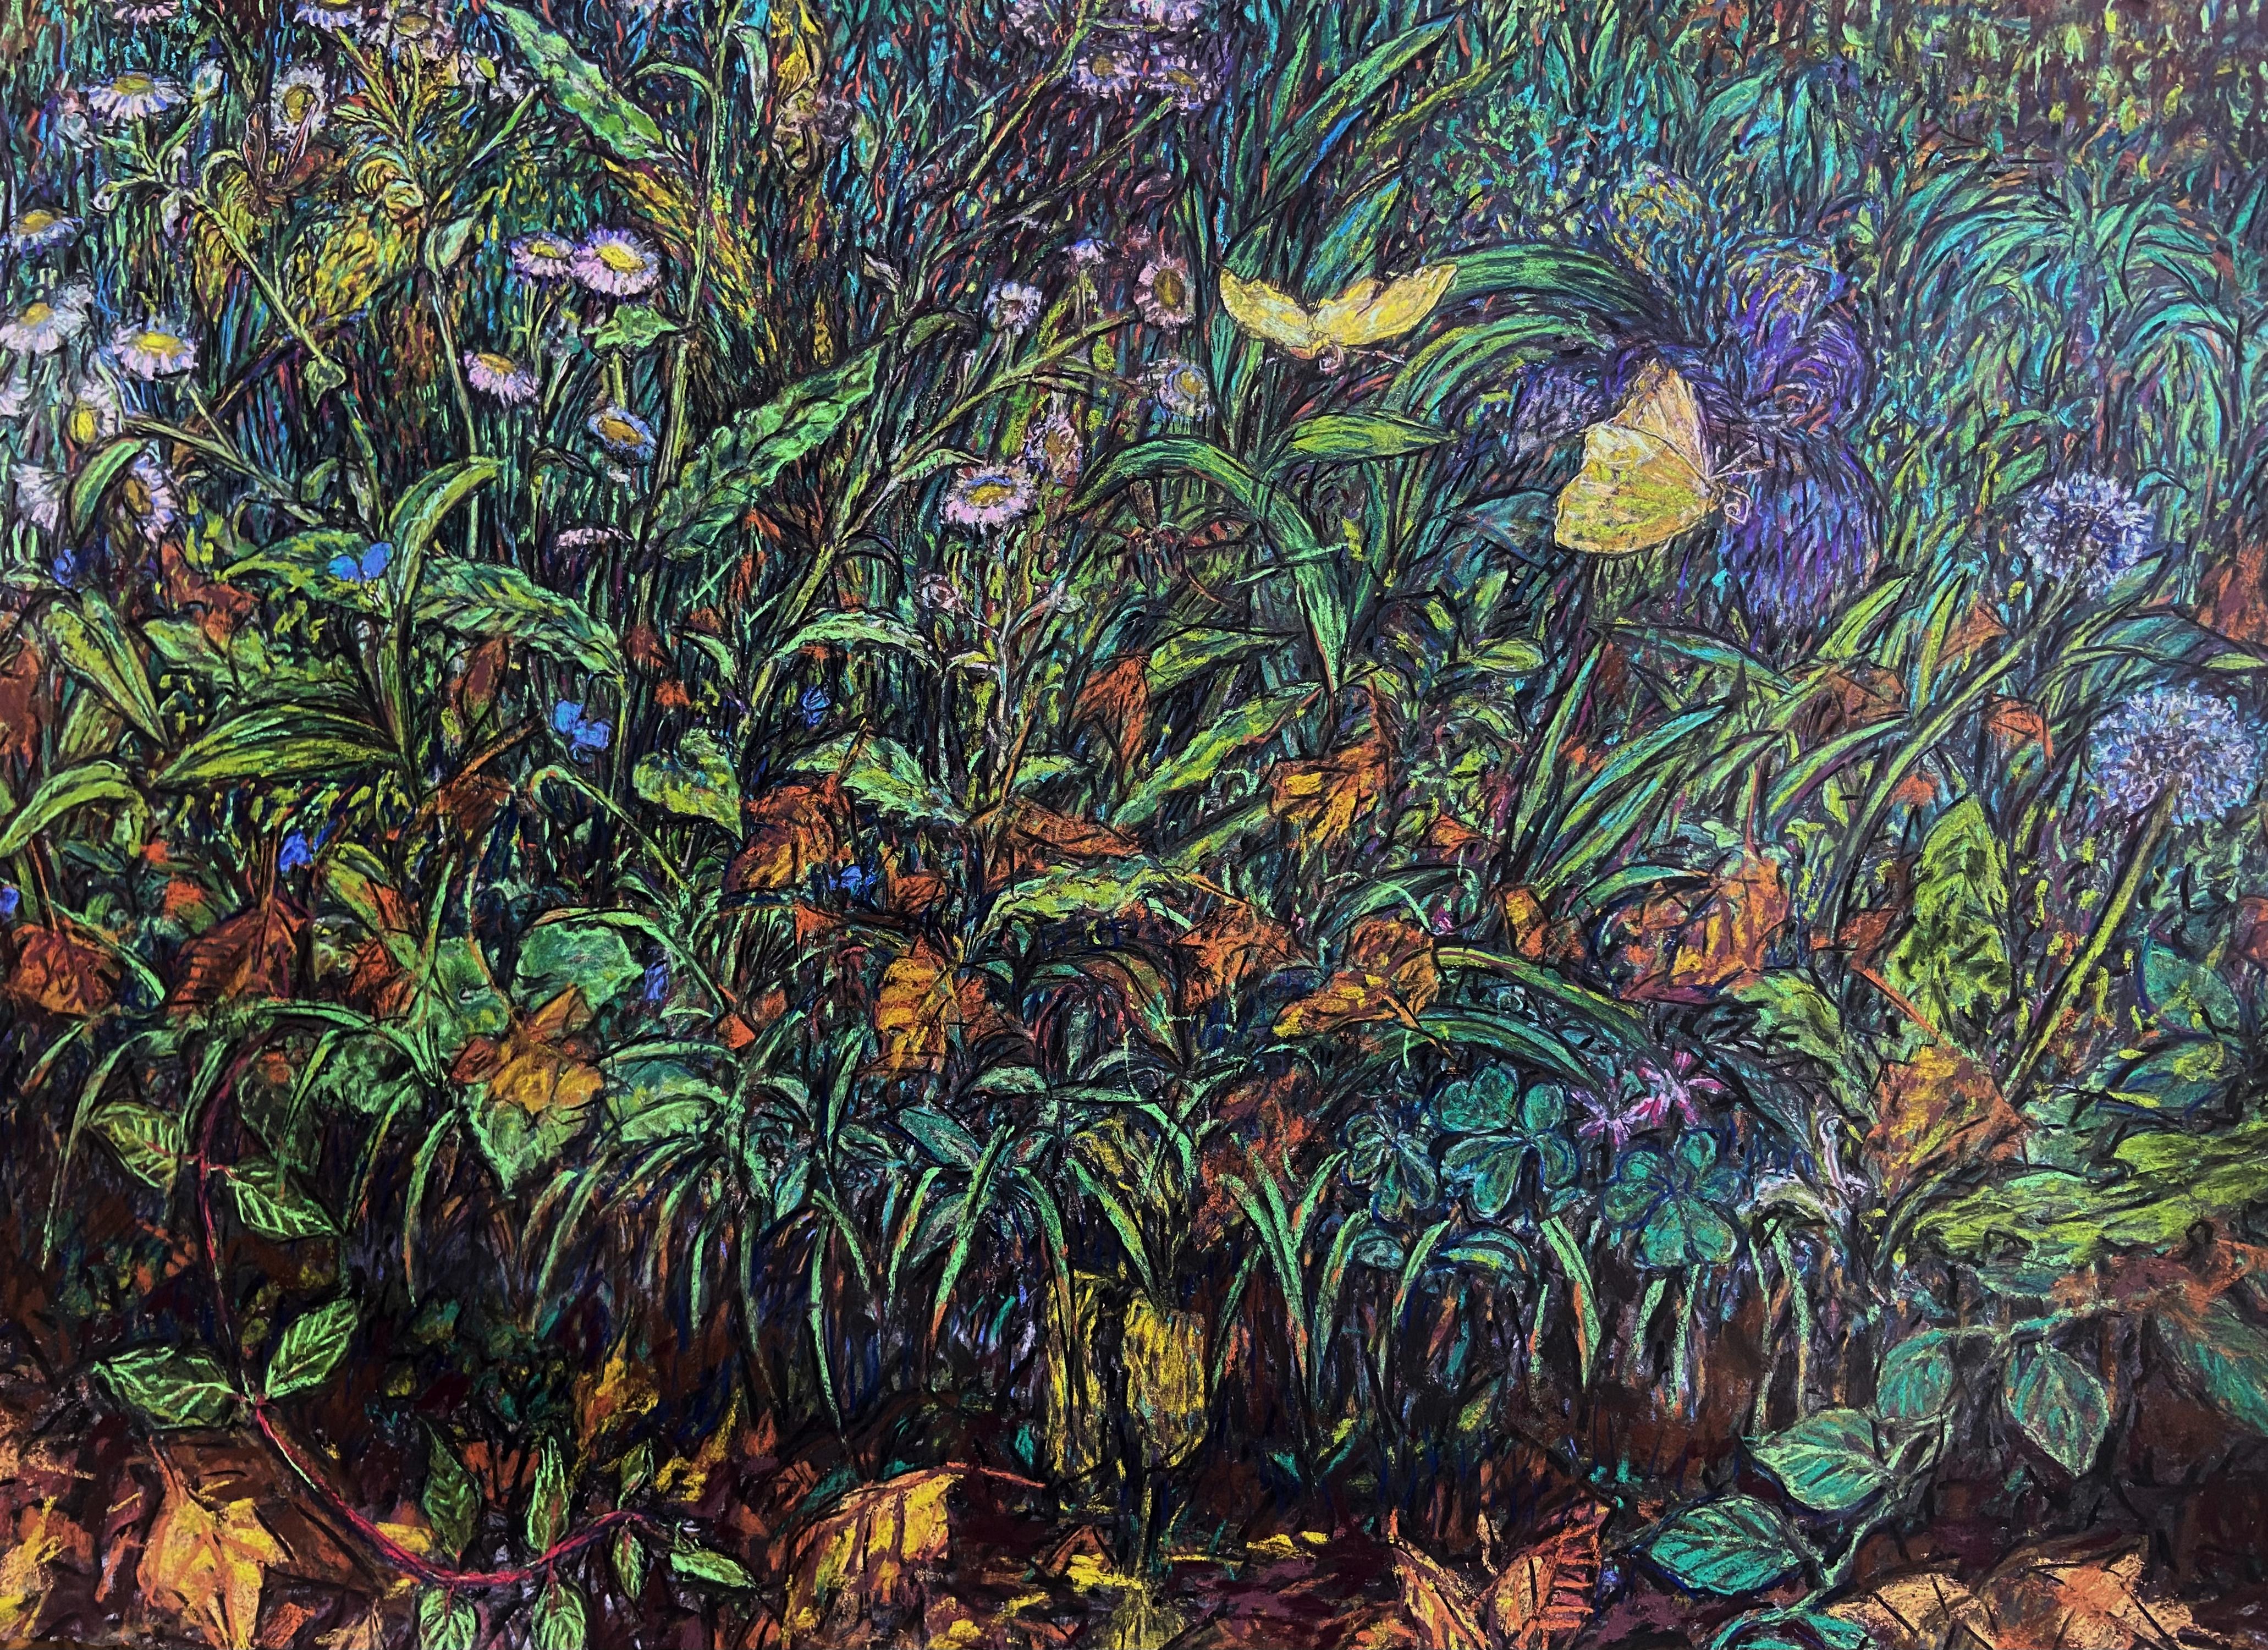 Erin Dixon Landscape Art - "Yellow Butterflies" - pastel drawing, nature, plants, still life, landscape